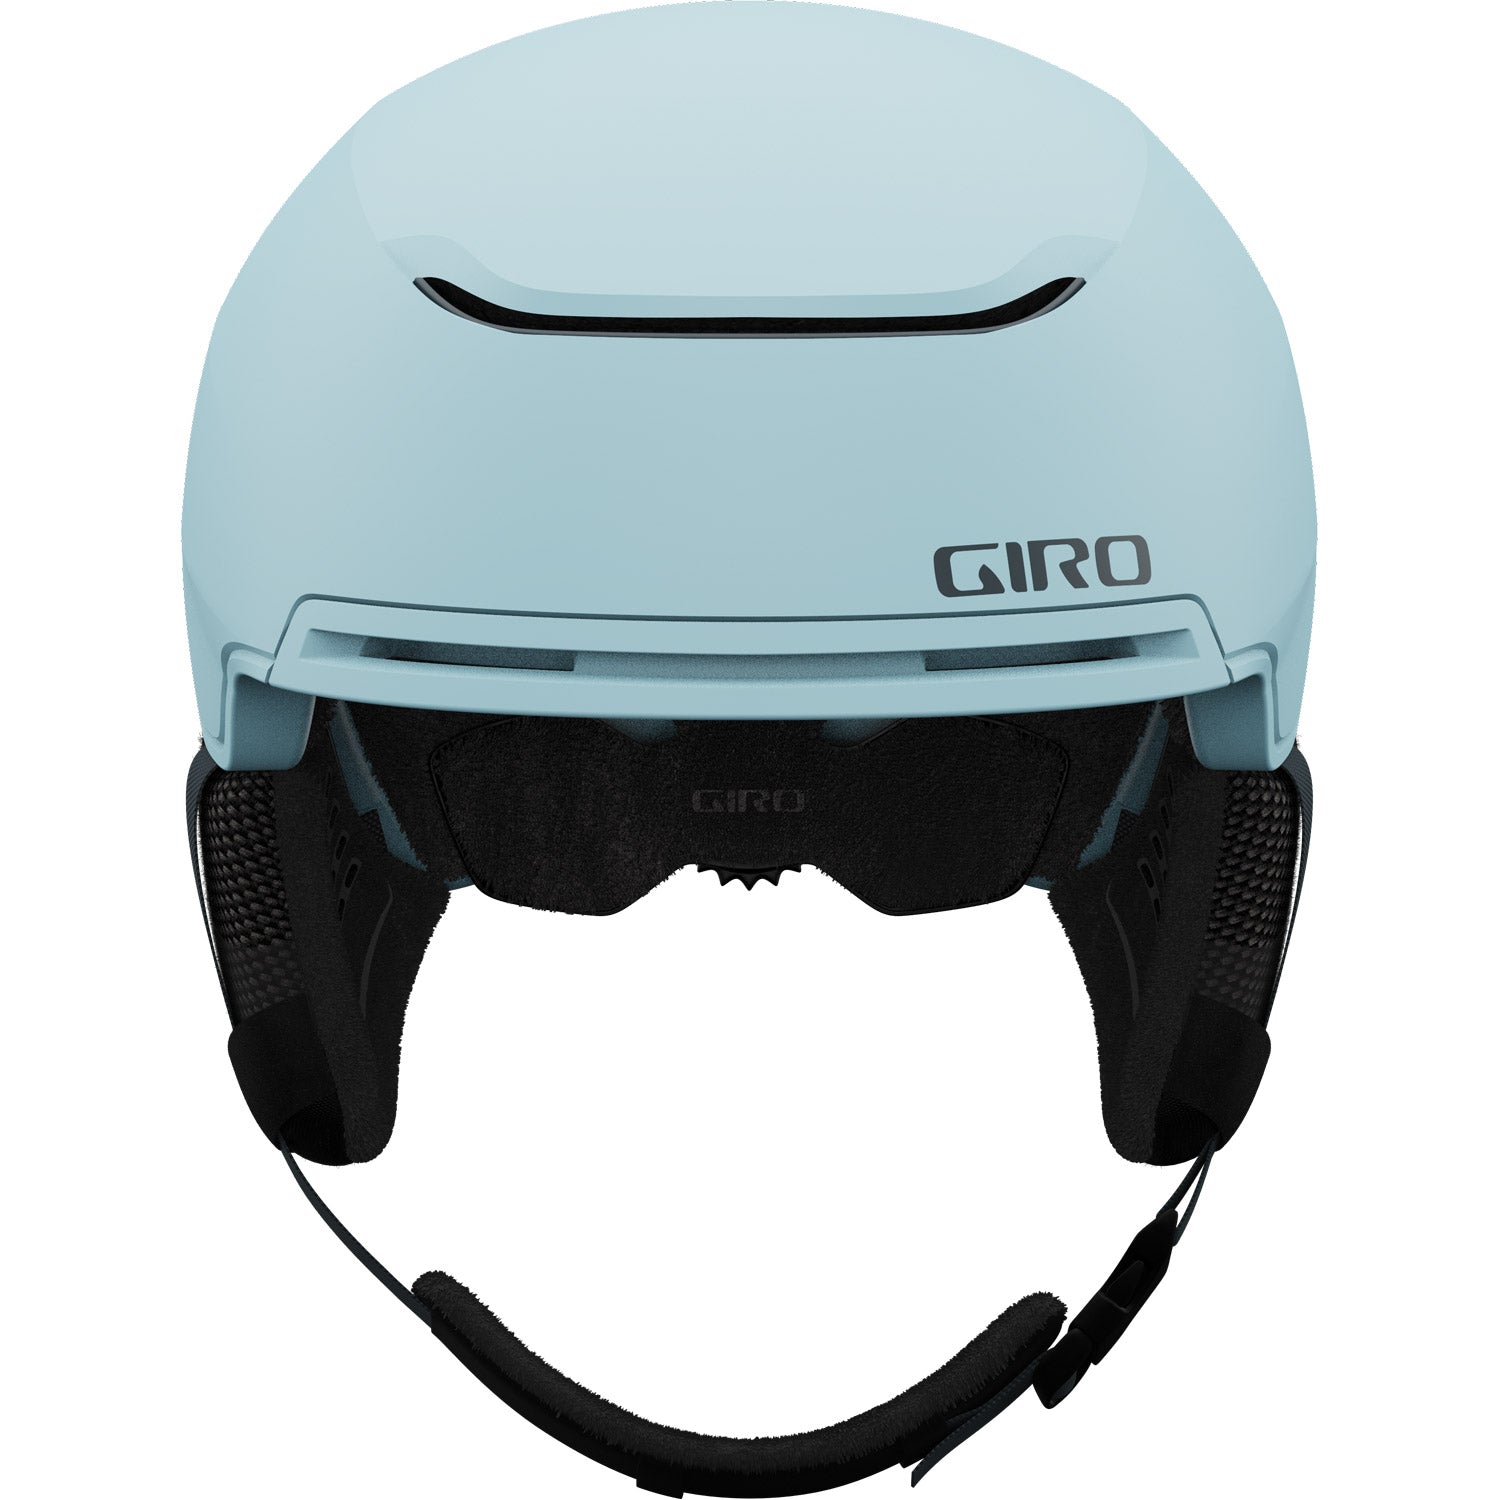 Terra Mips Snow Helmet 